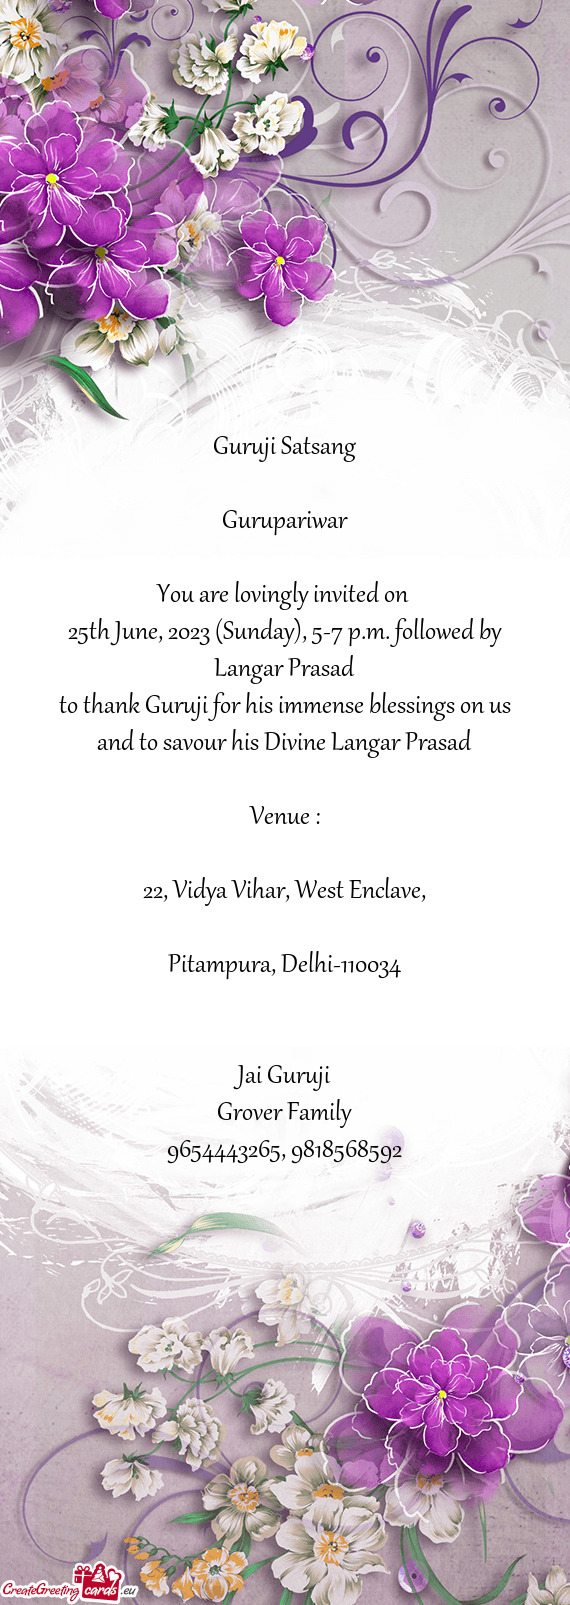 25th June, 2023 (Sunday), 5-7 p.m. followed by Langar Prasad